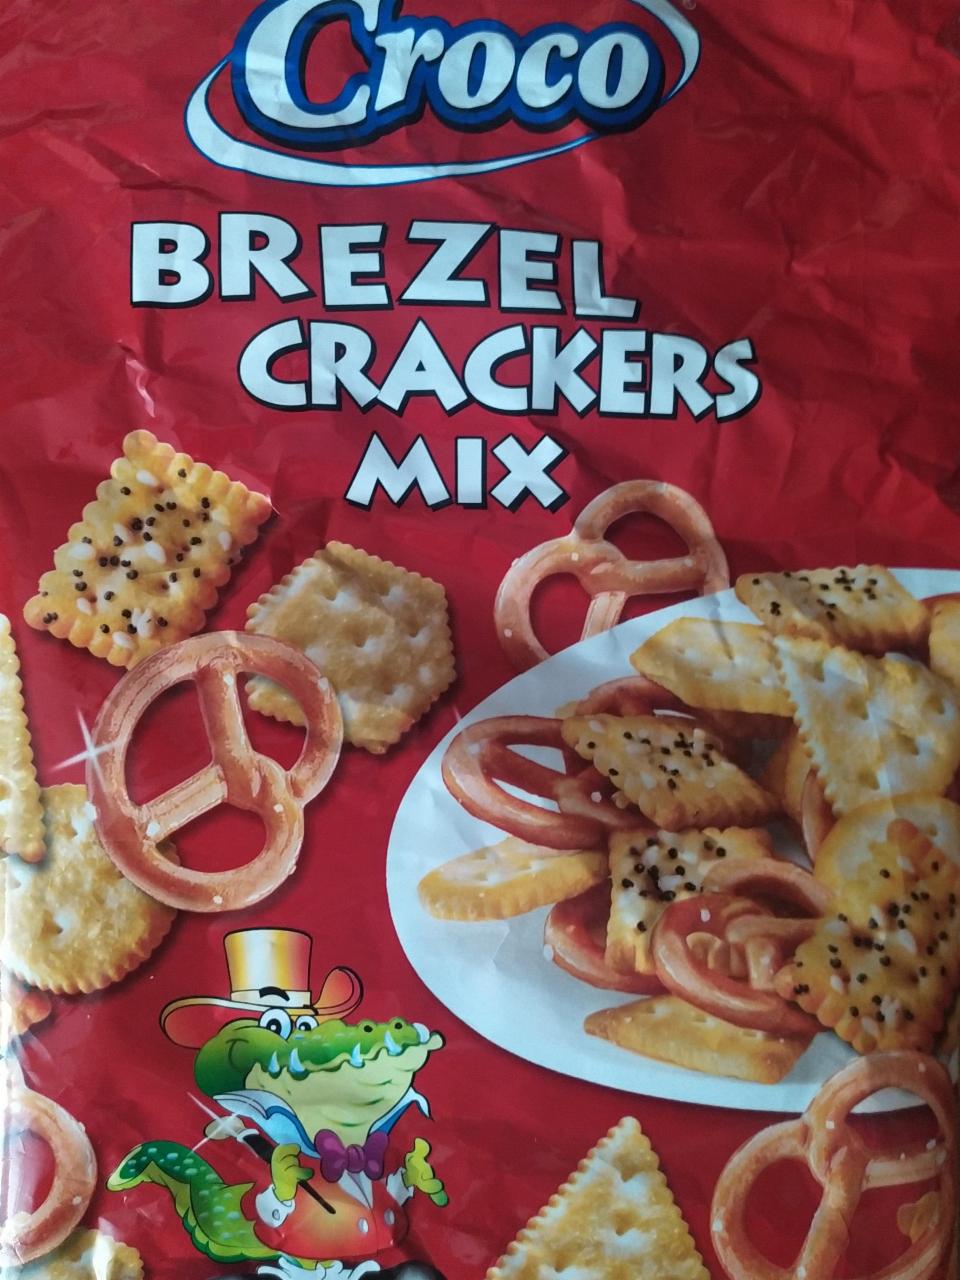 Fotografie - Brezel Crackers Mix Croco